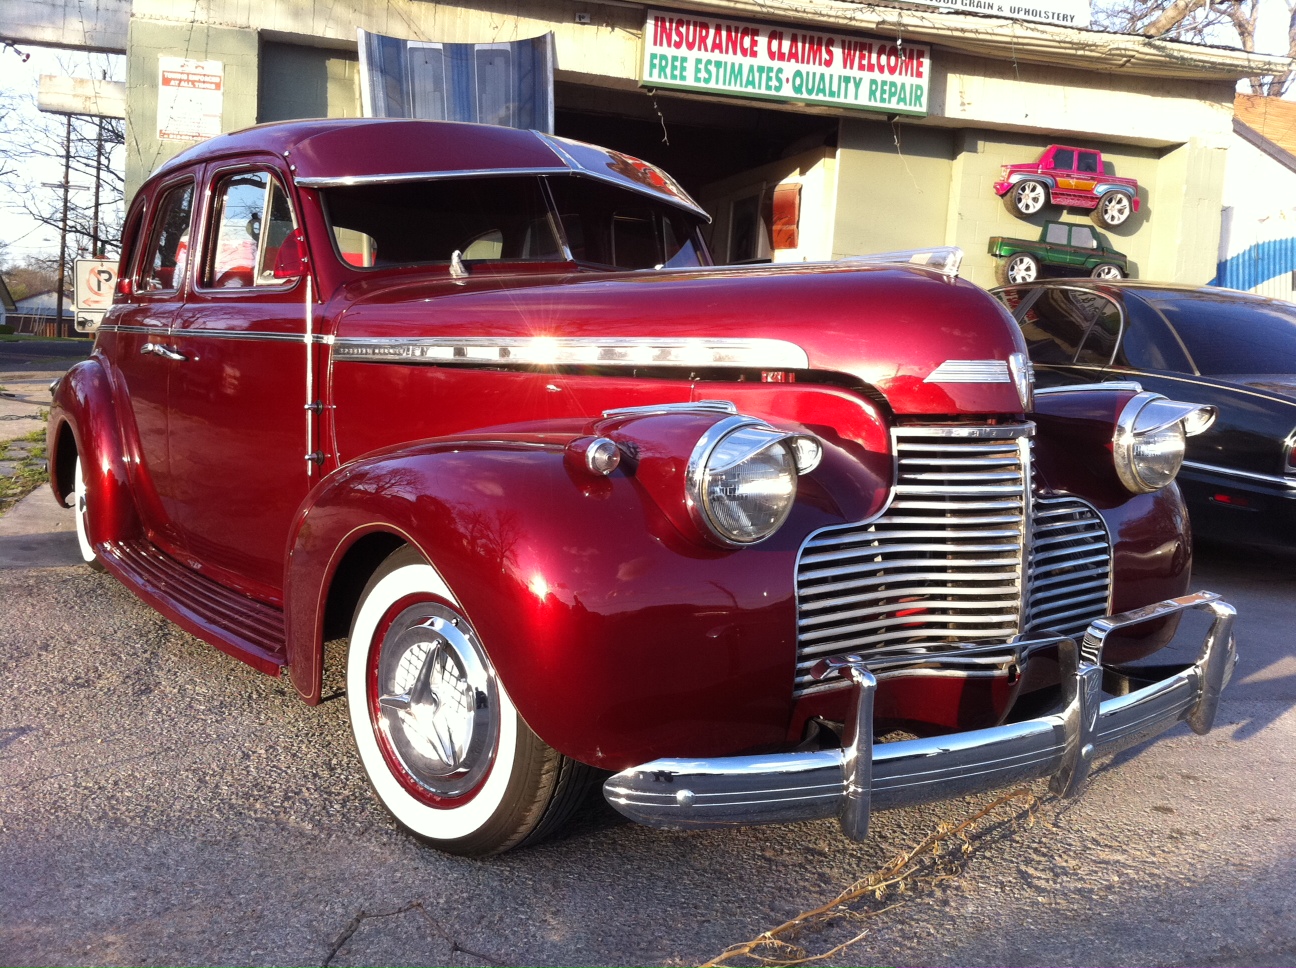 1938 Chevy Sedan at J. Colunga’s Body and Paint Shop on E. Cesar Chavez